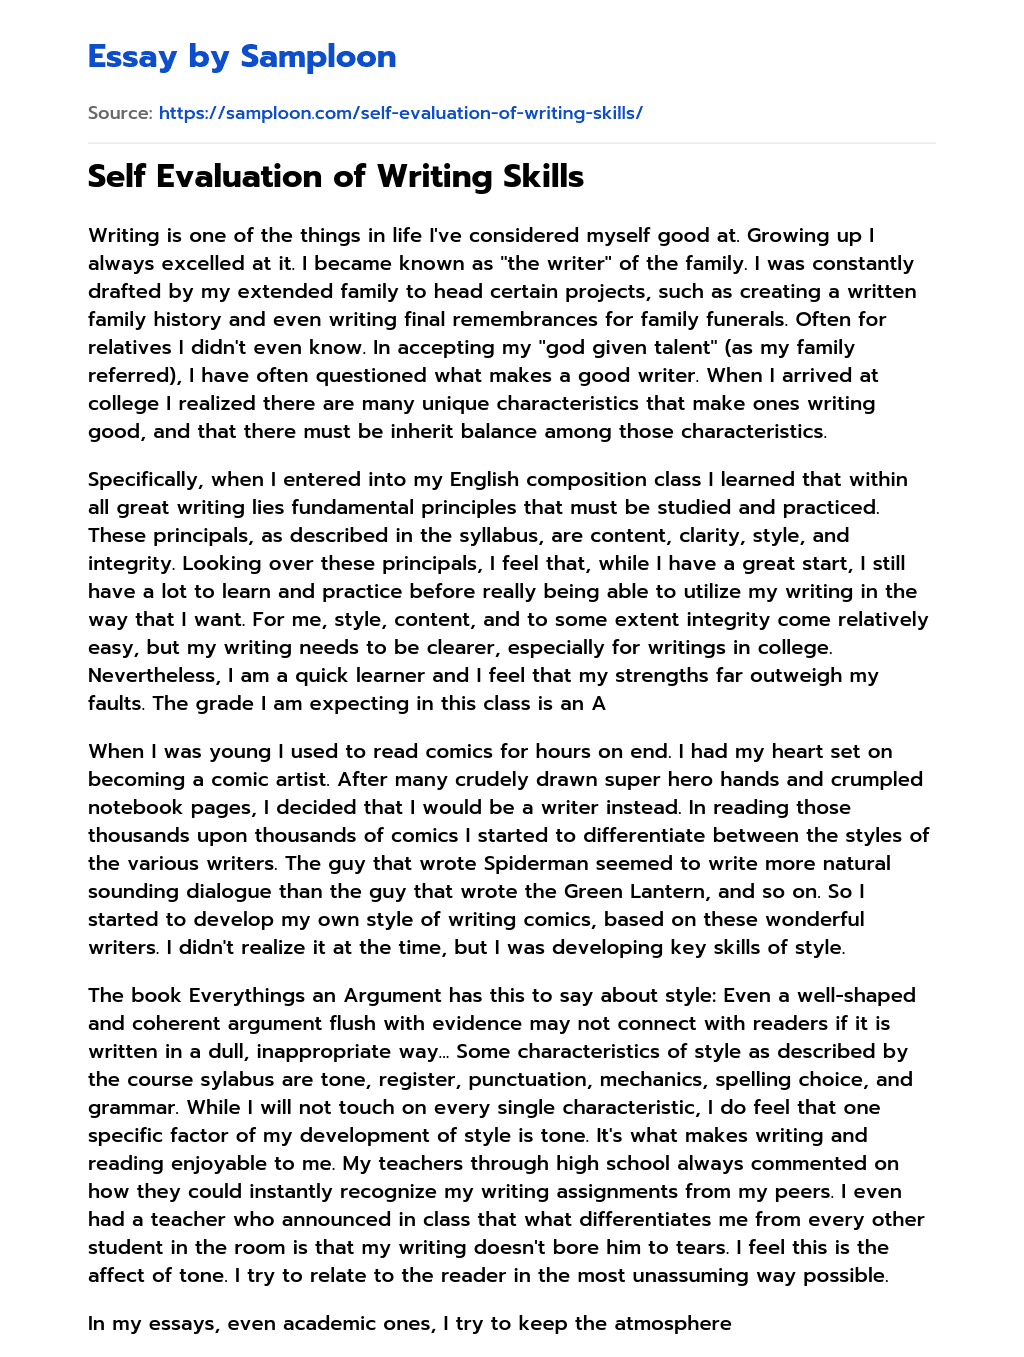 Self Evaluation of Writing Skills essay